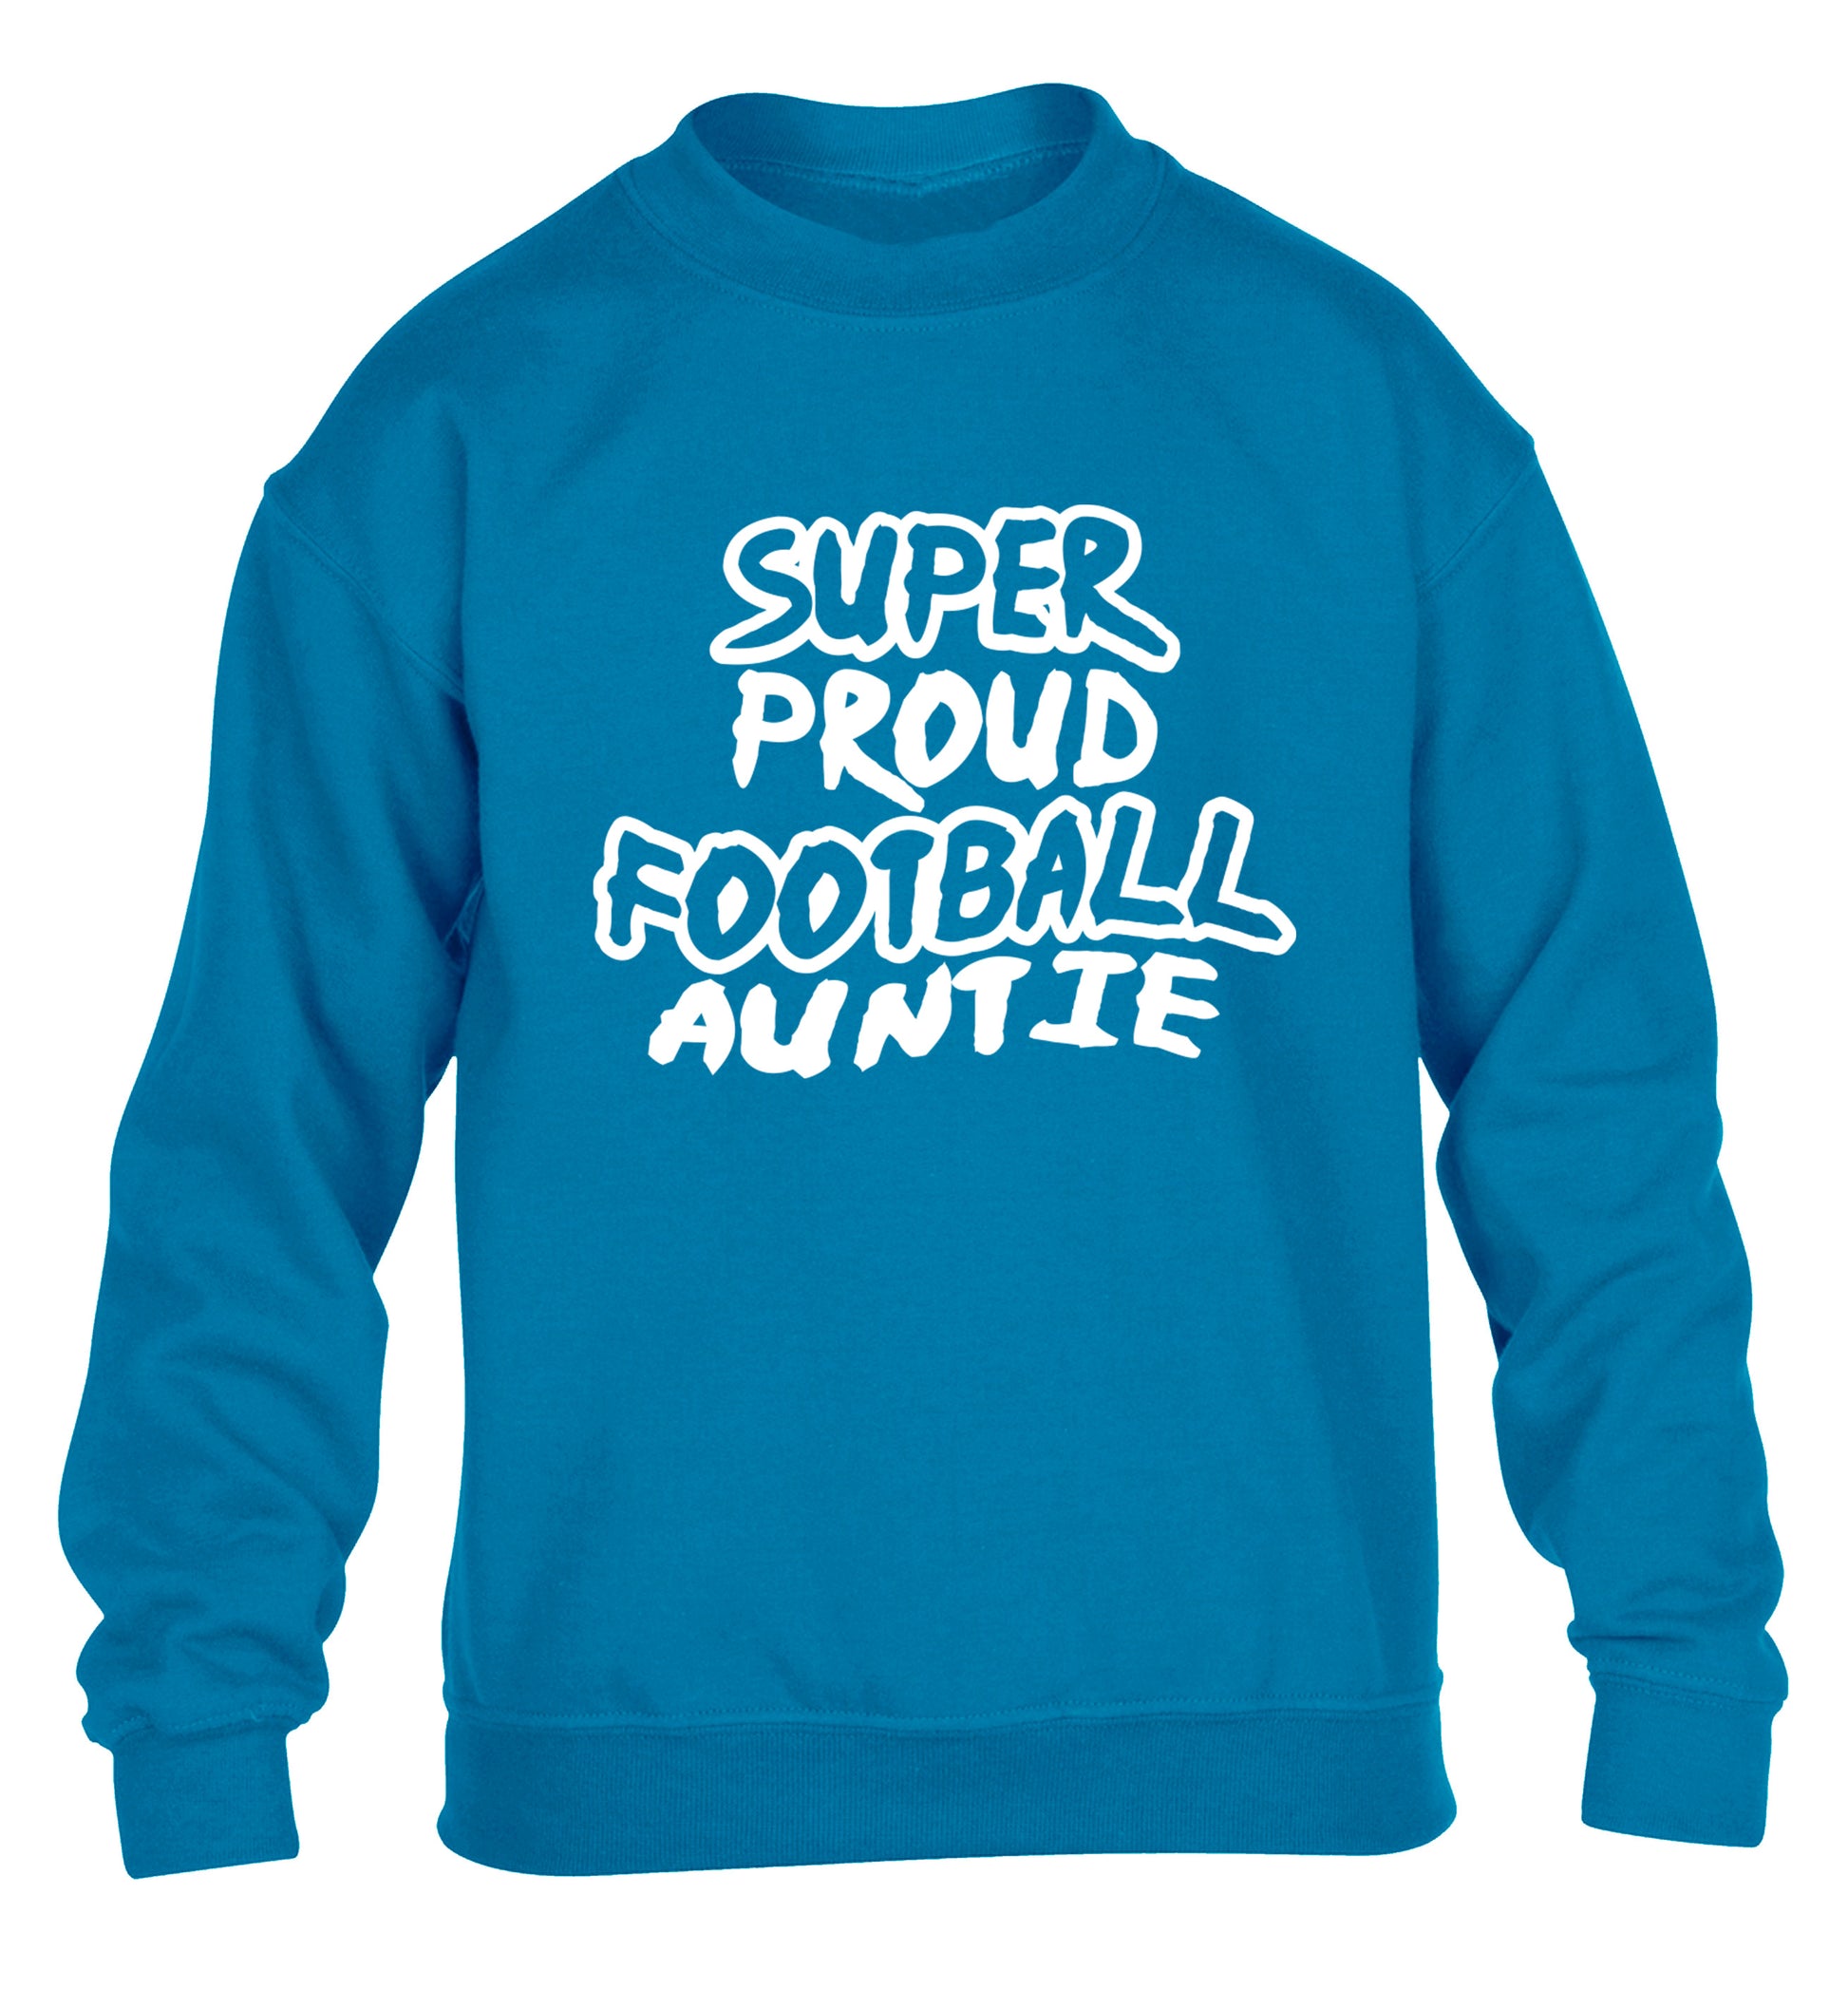 Super proud football auntie children's blue sweater 12-14 Years